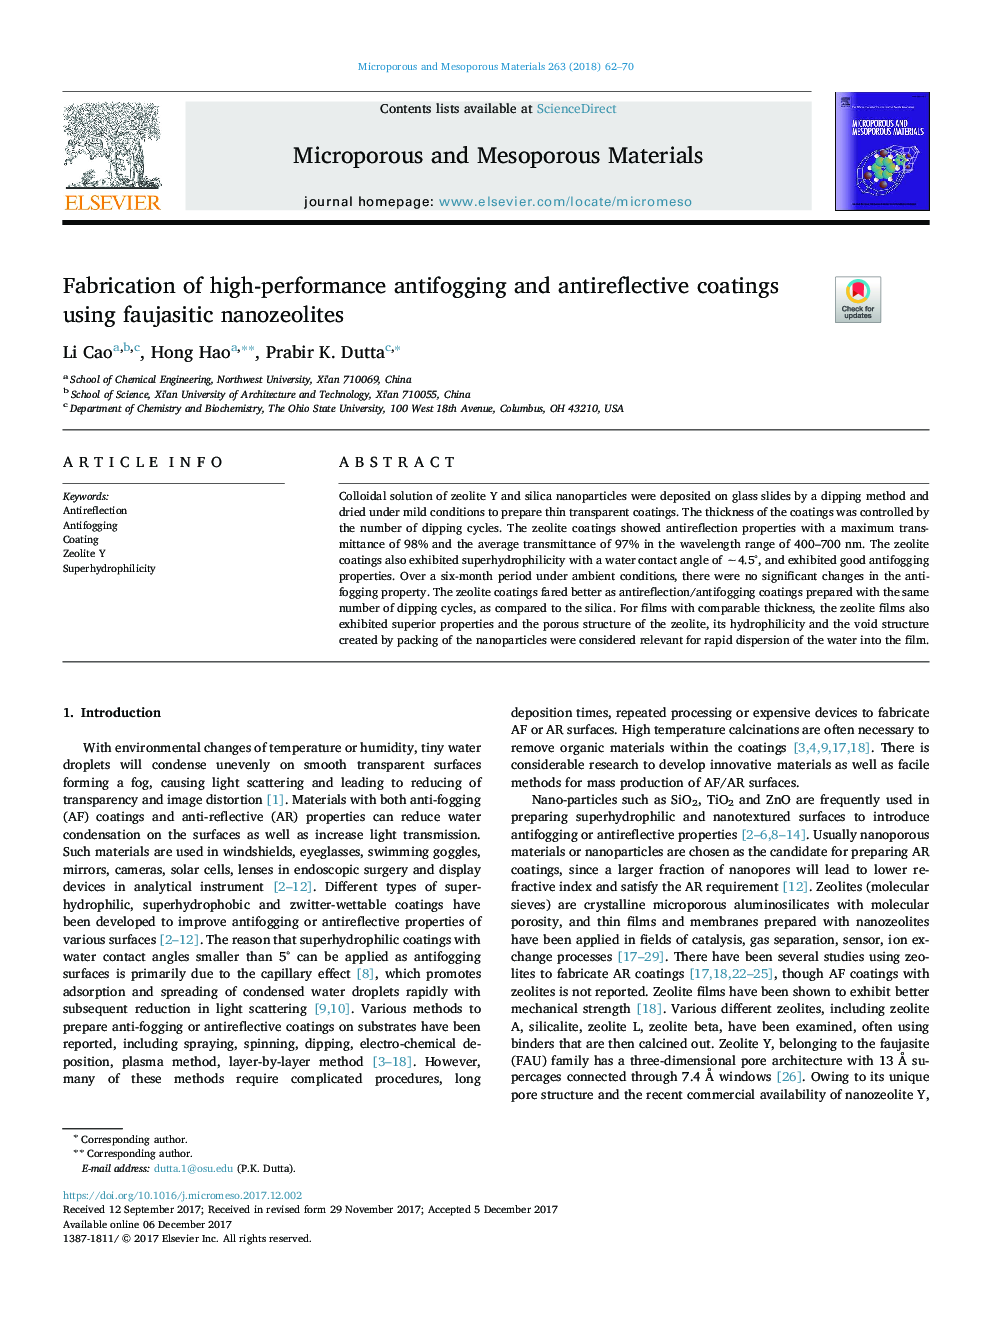 Fabrication of high-performance antifogging and antireflective coatings using faujasitic nanozeolites